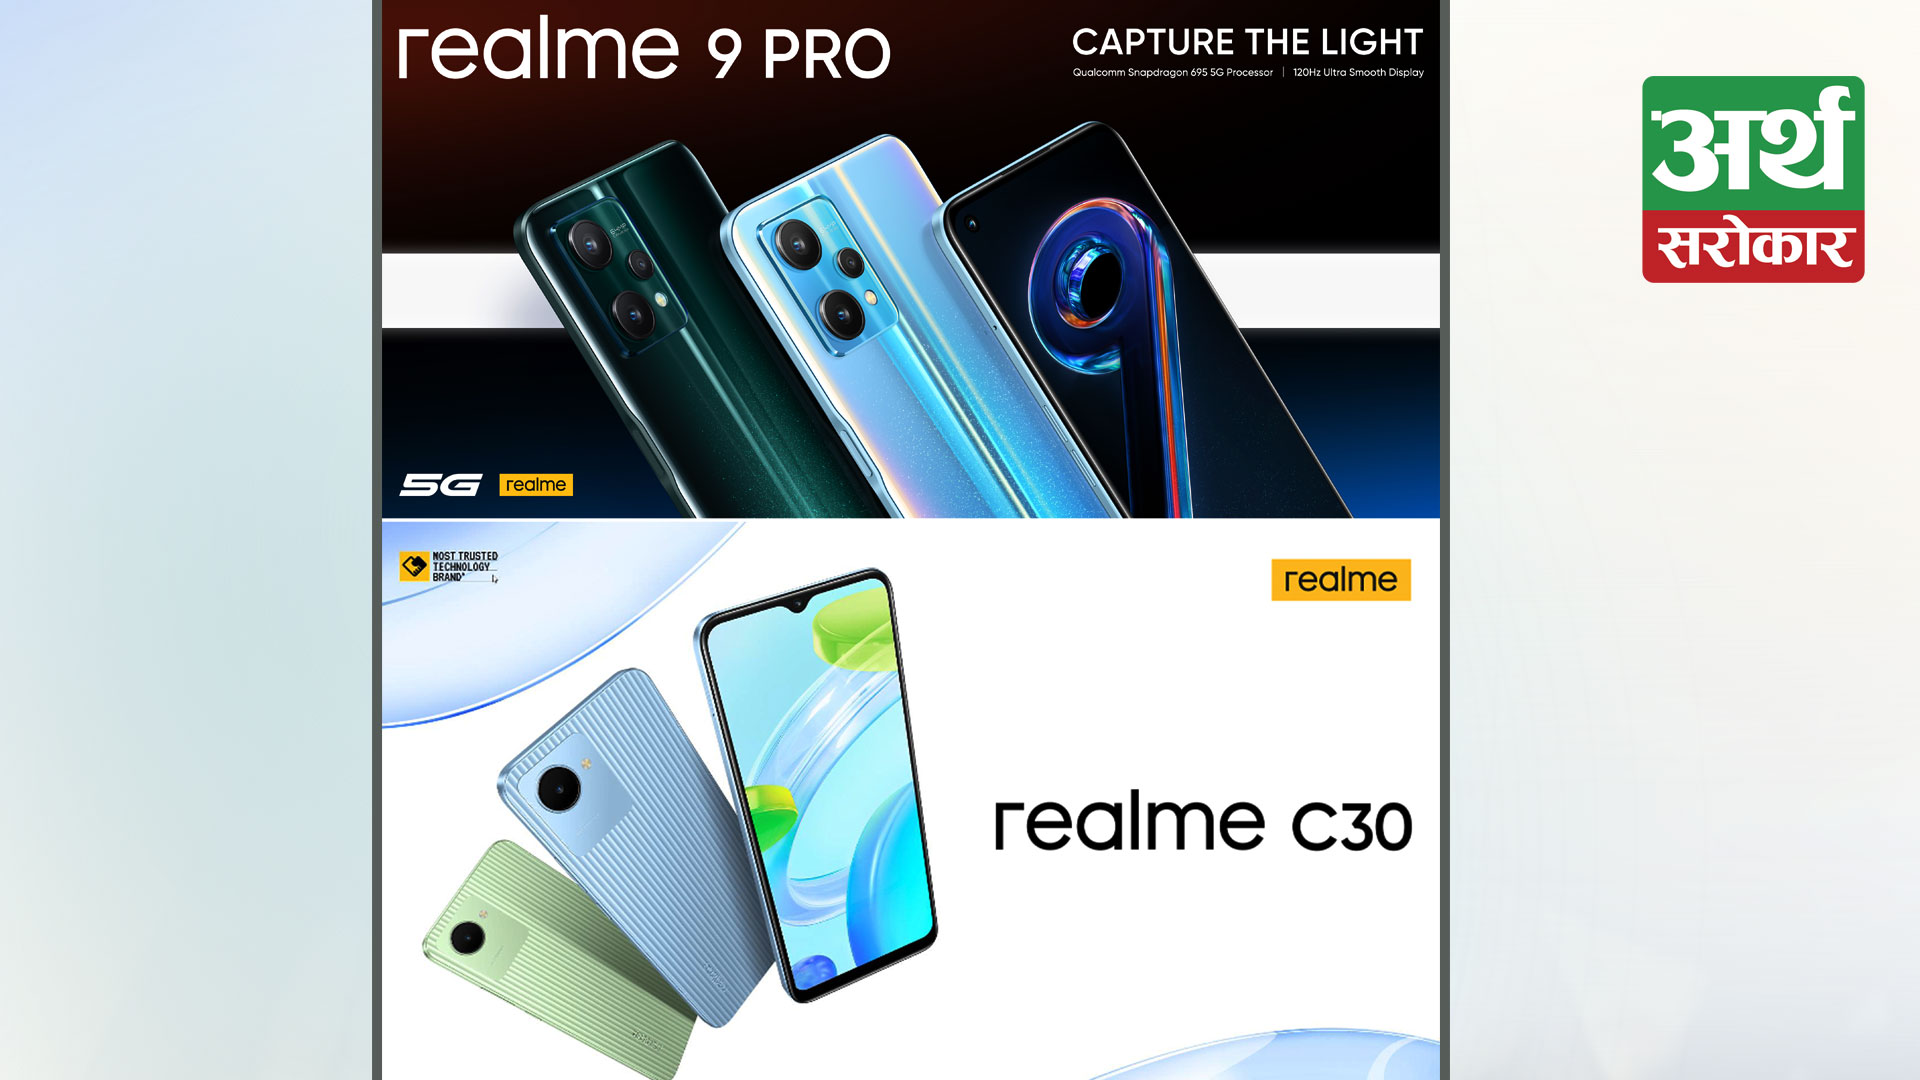 realme unveils the realme 9 Pro 5G and the realme C30